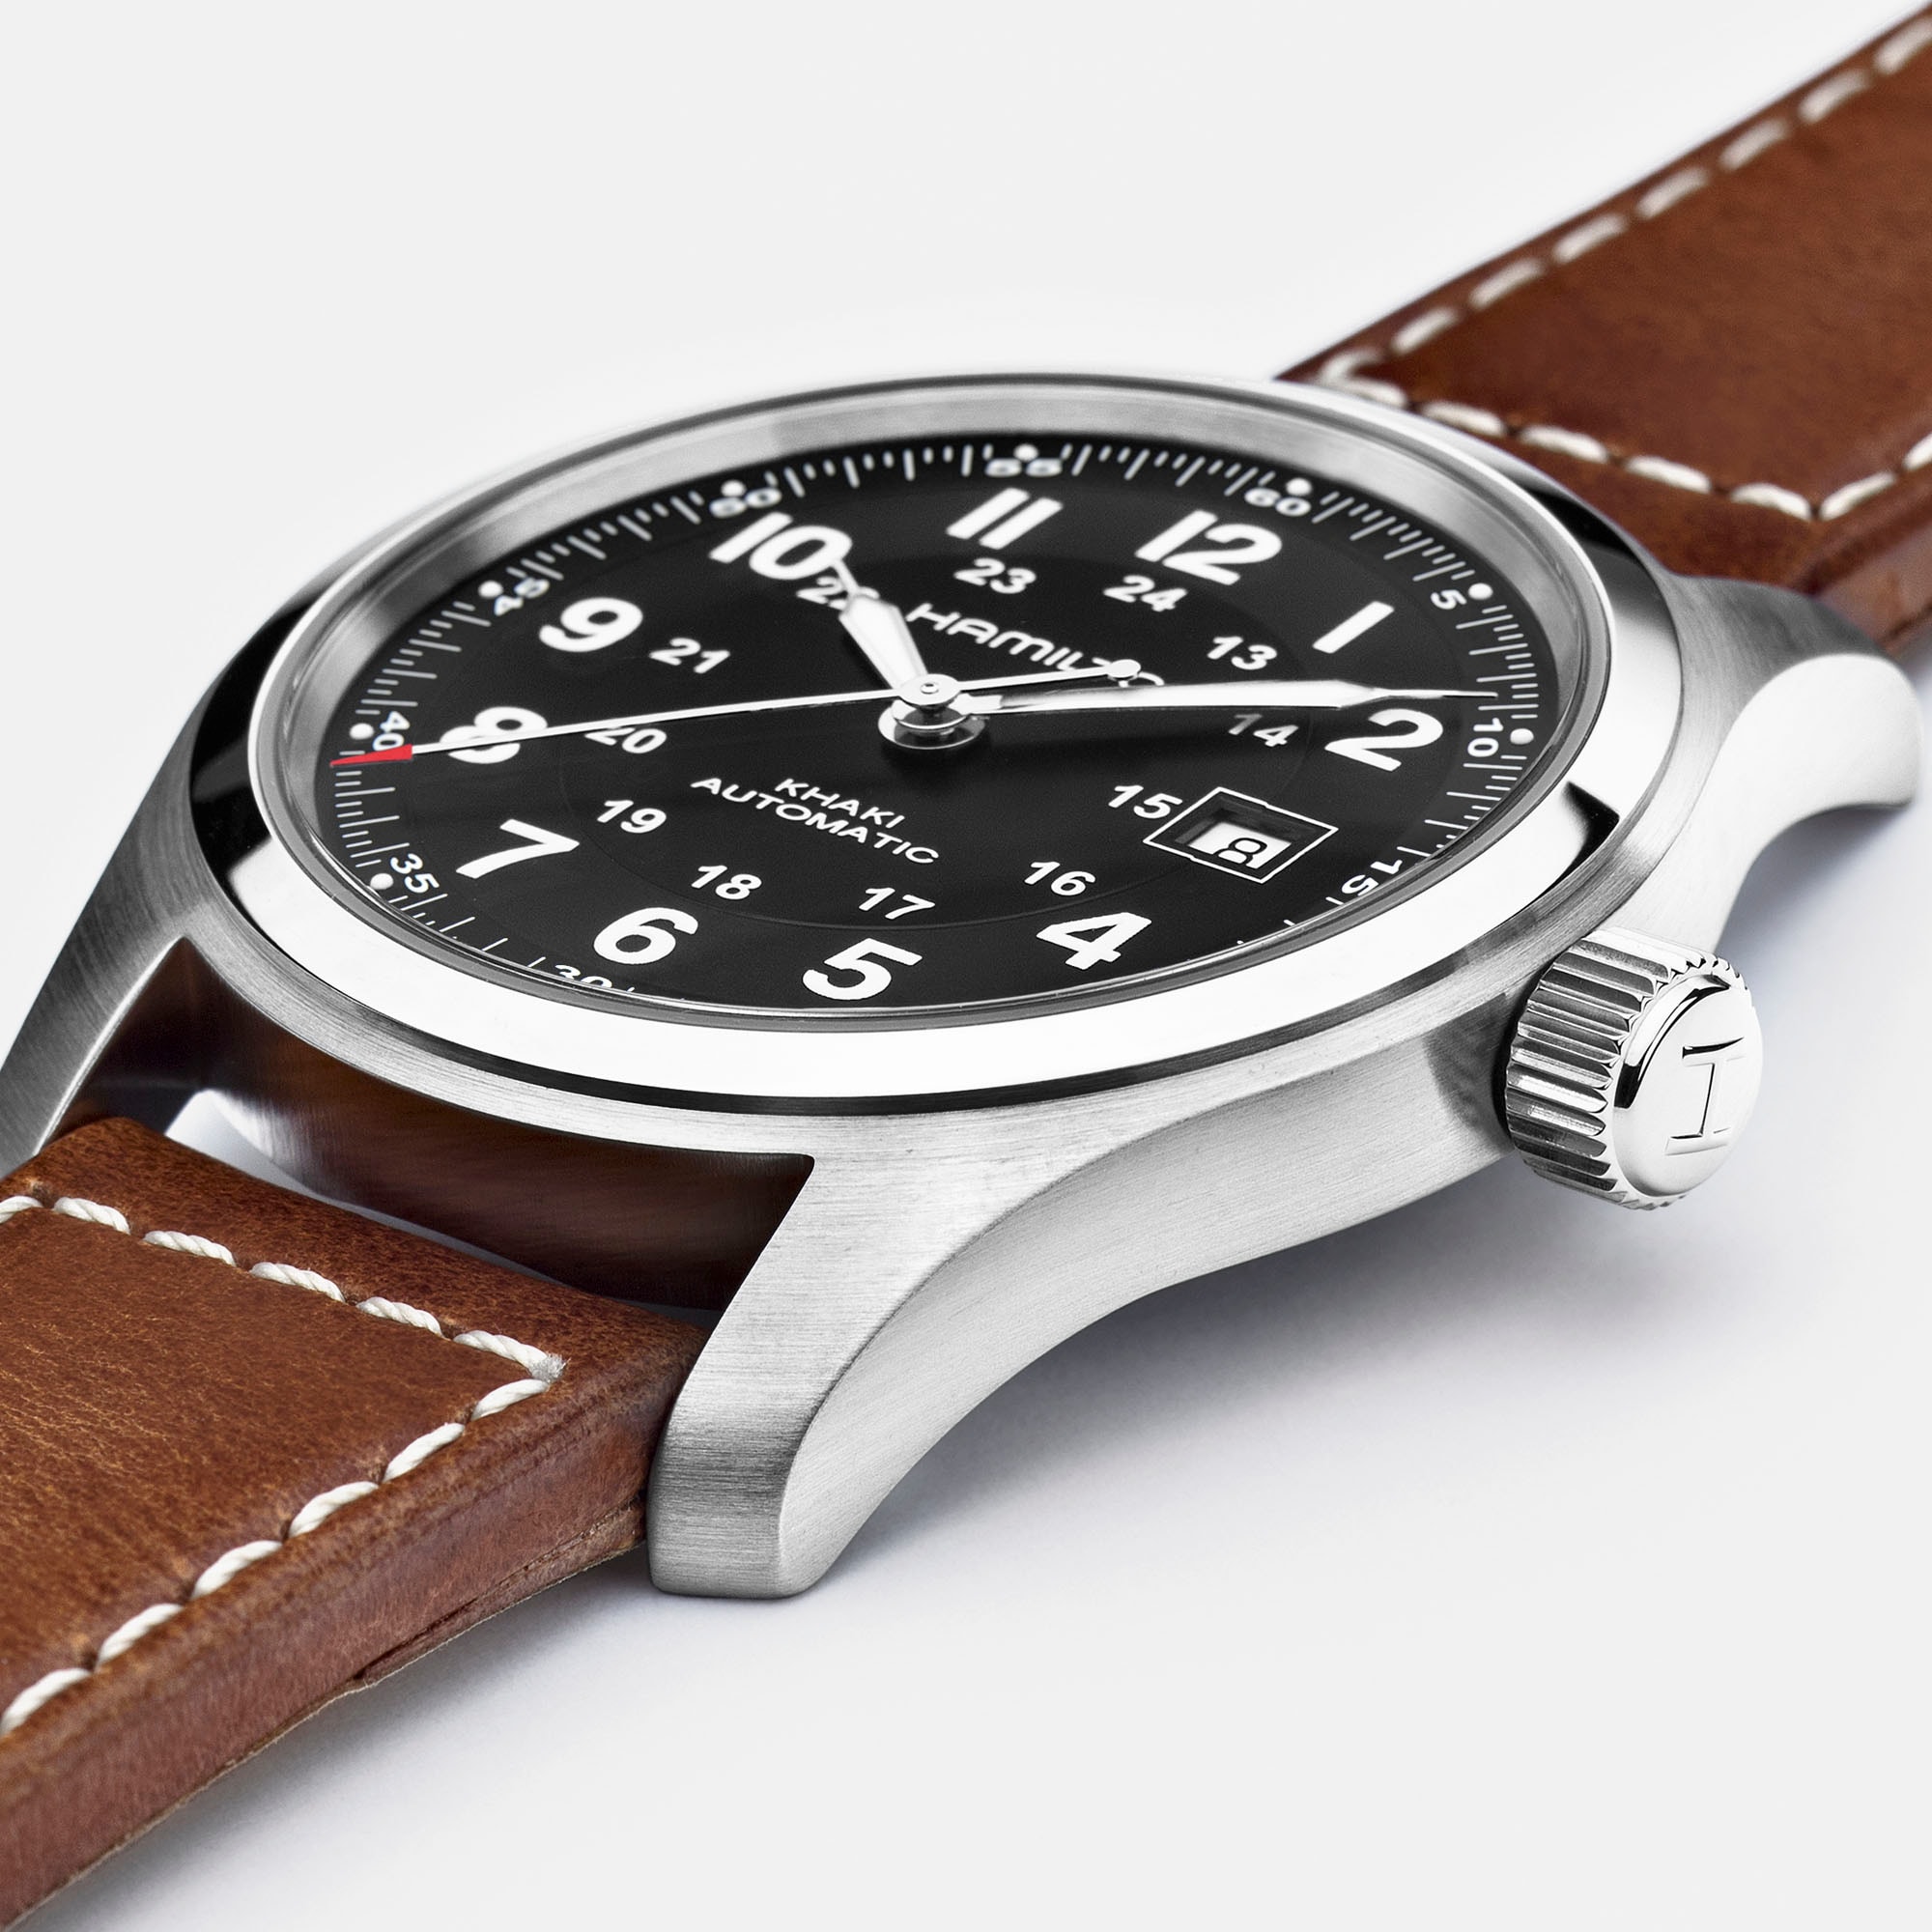 Khaki Field Automatic Watch Black Dial H70555533 Hamilton Watch